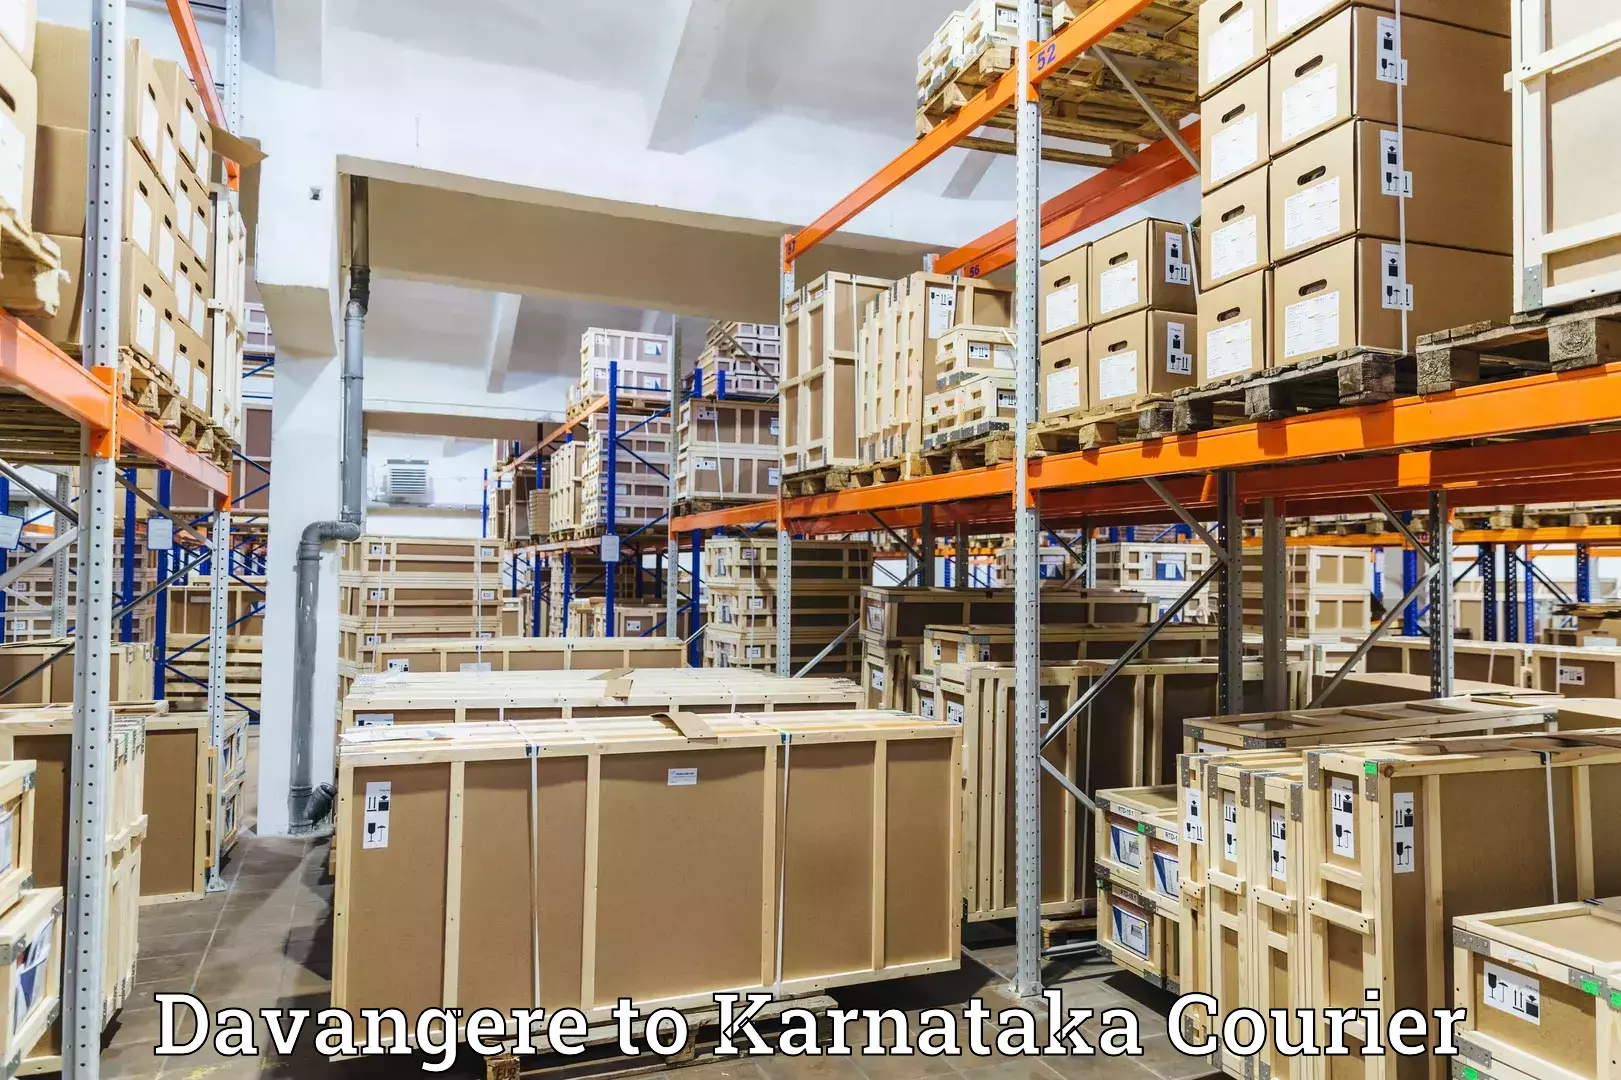 Seamless shipping experience Davangere to Shorapur